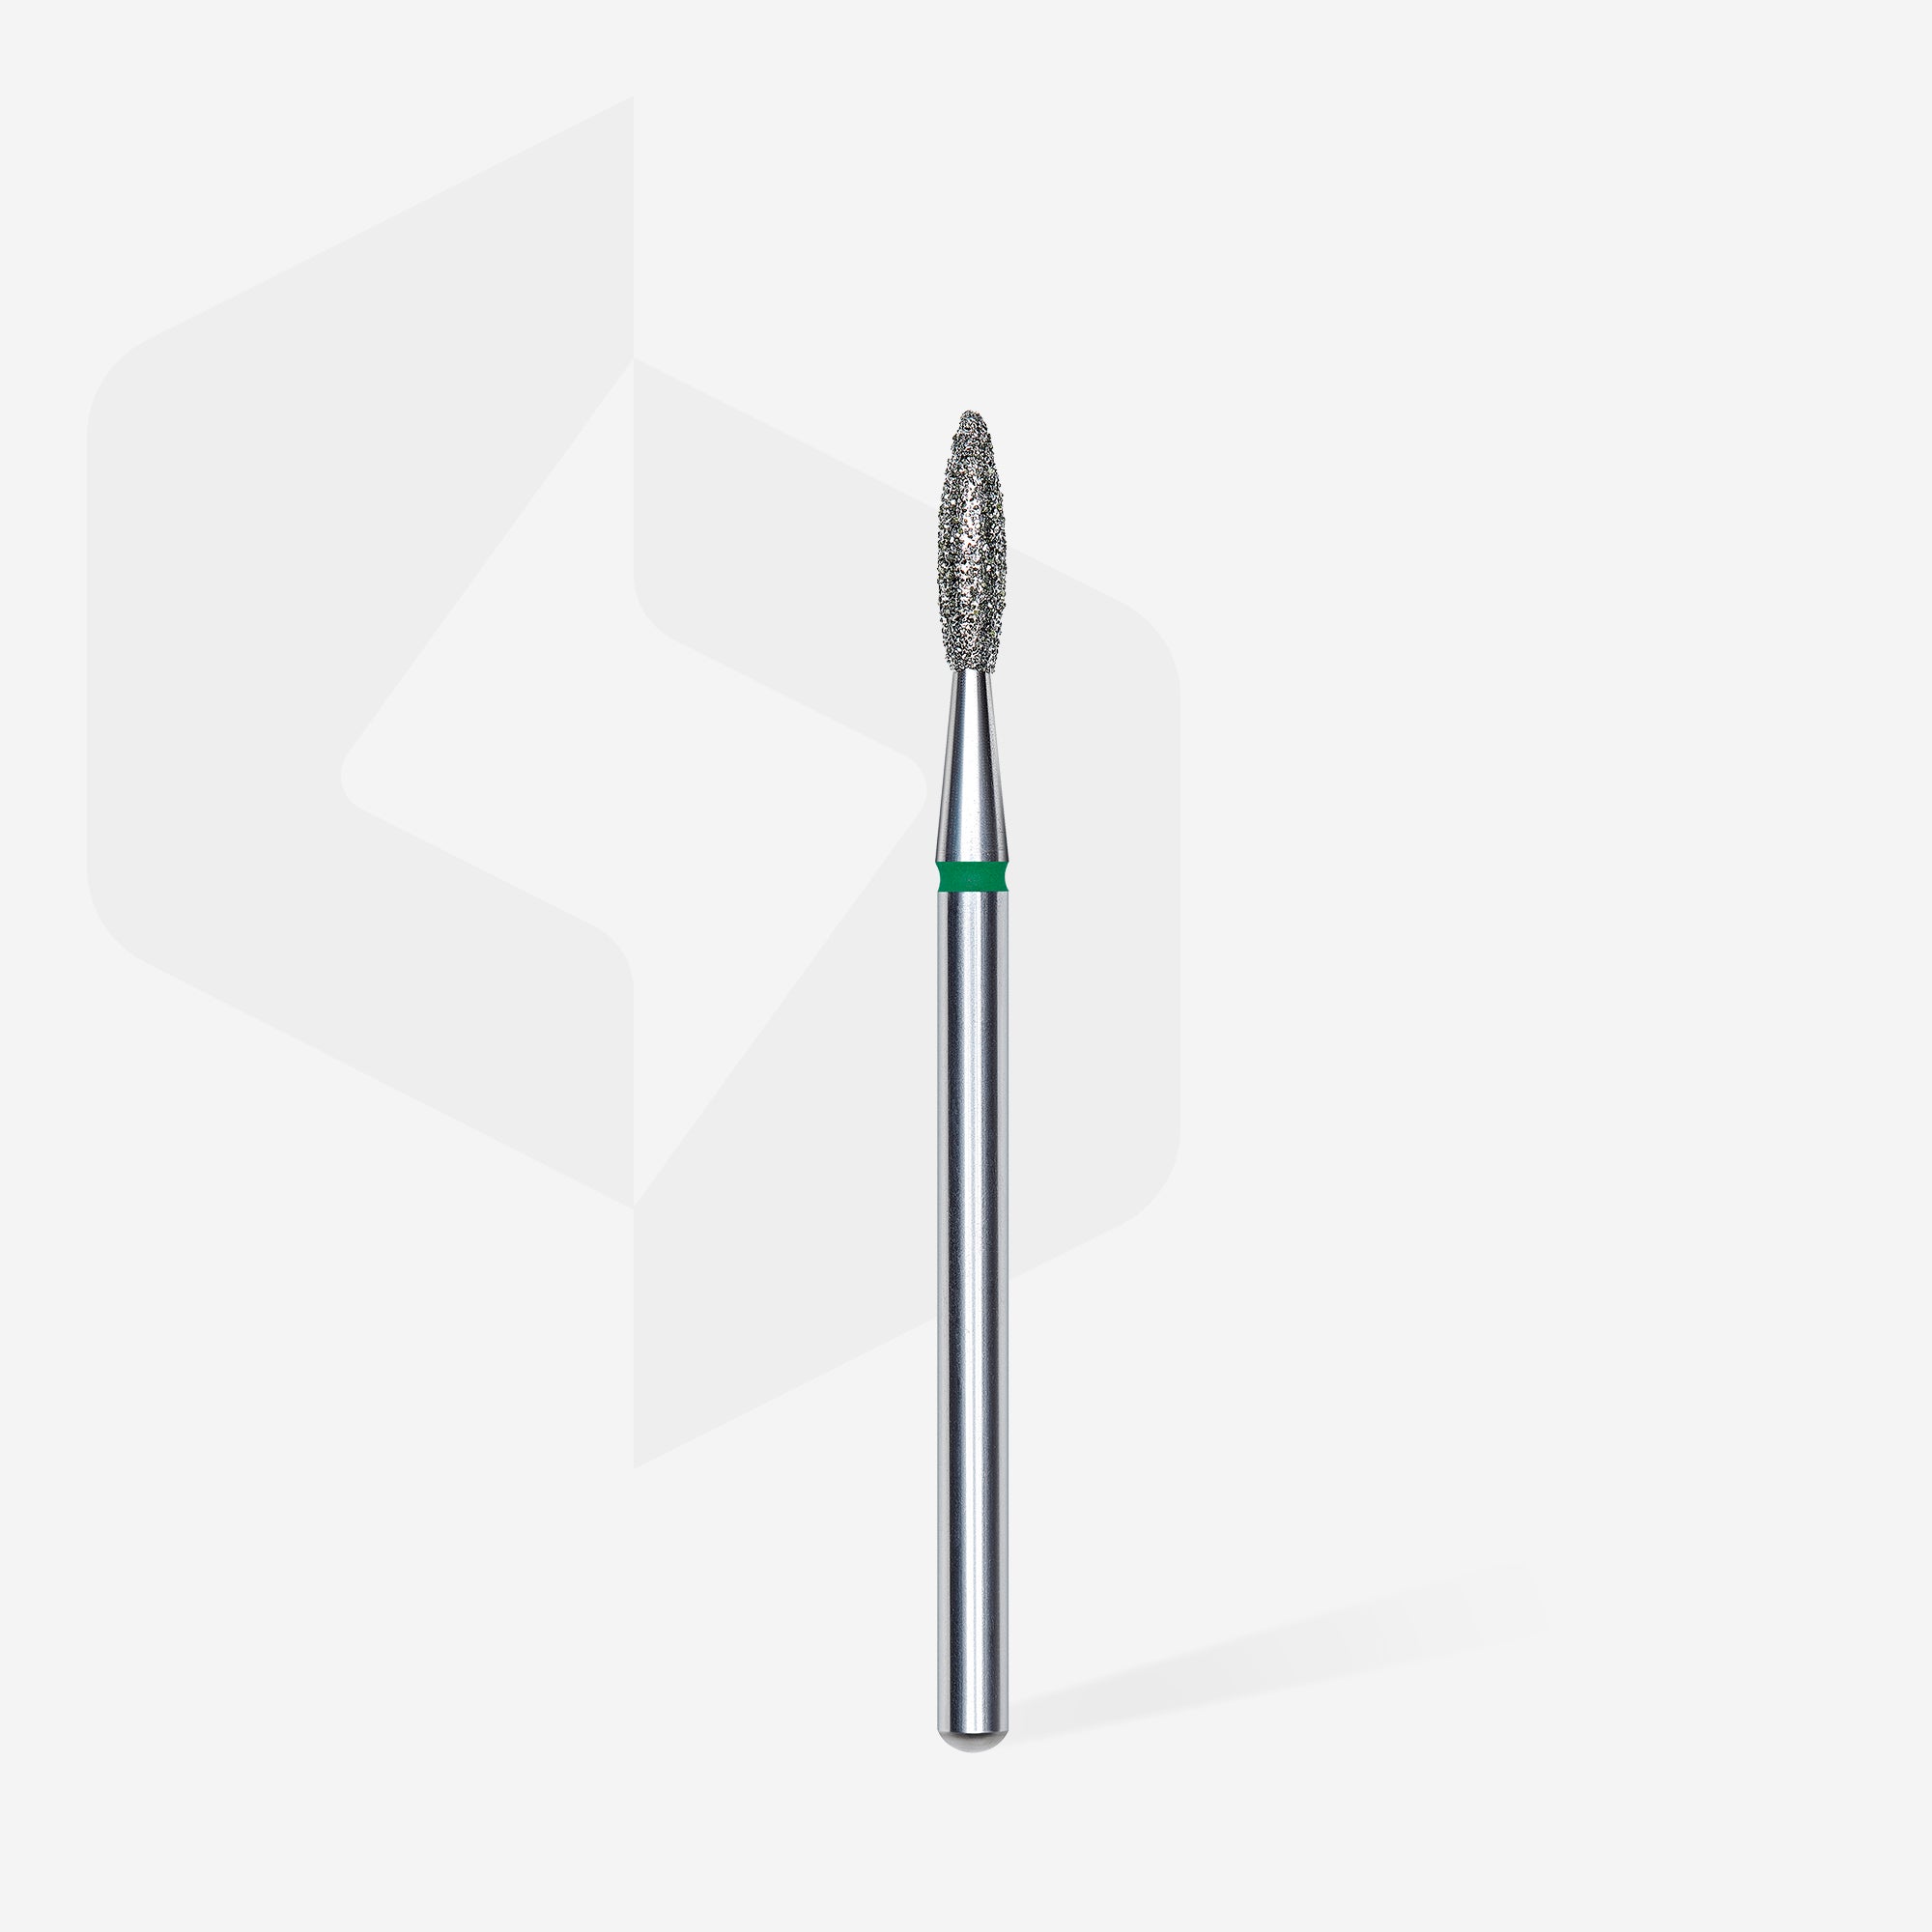 Diamond nail drill bit flame green EXPERT head diameter 2,1 mm / working part 8 mm